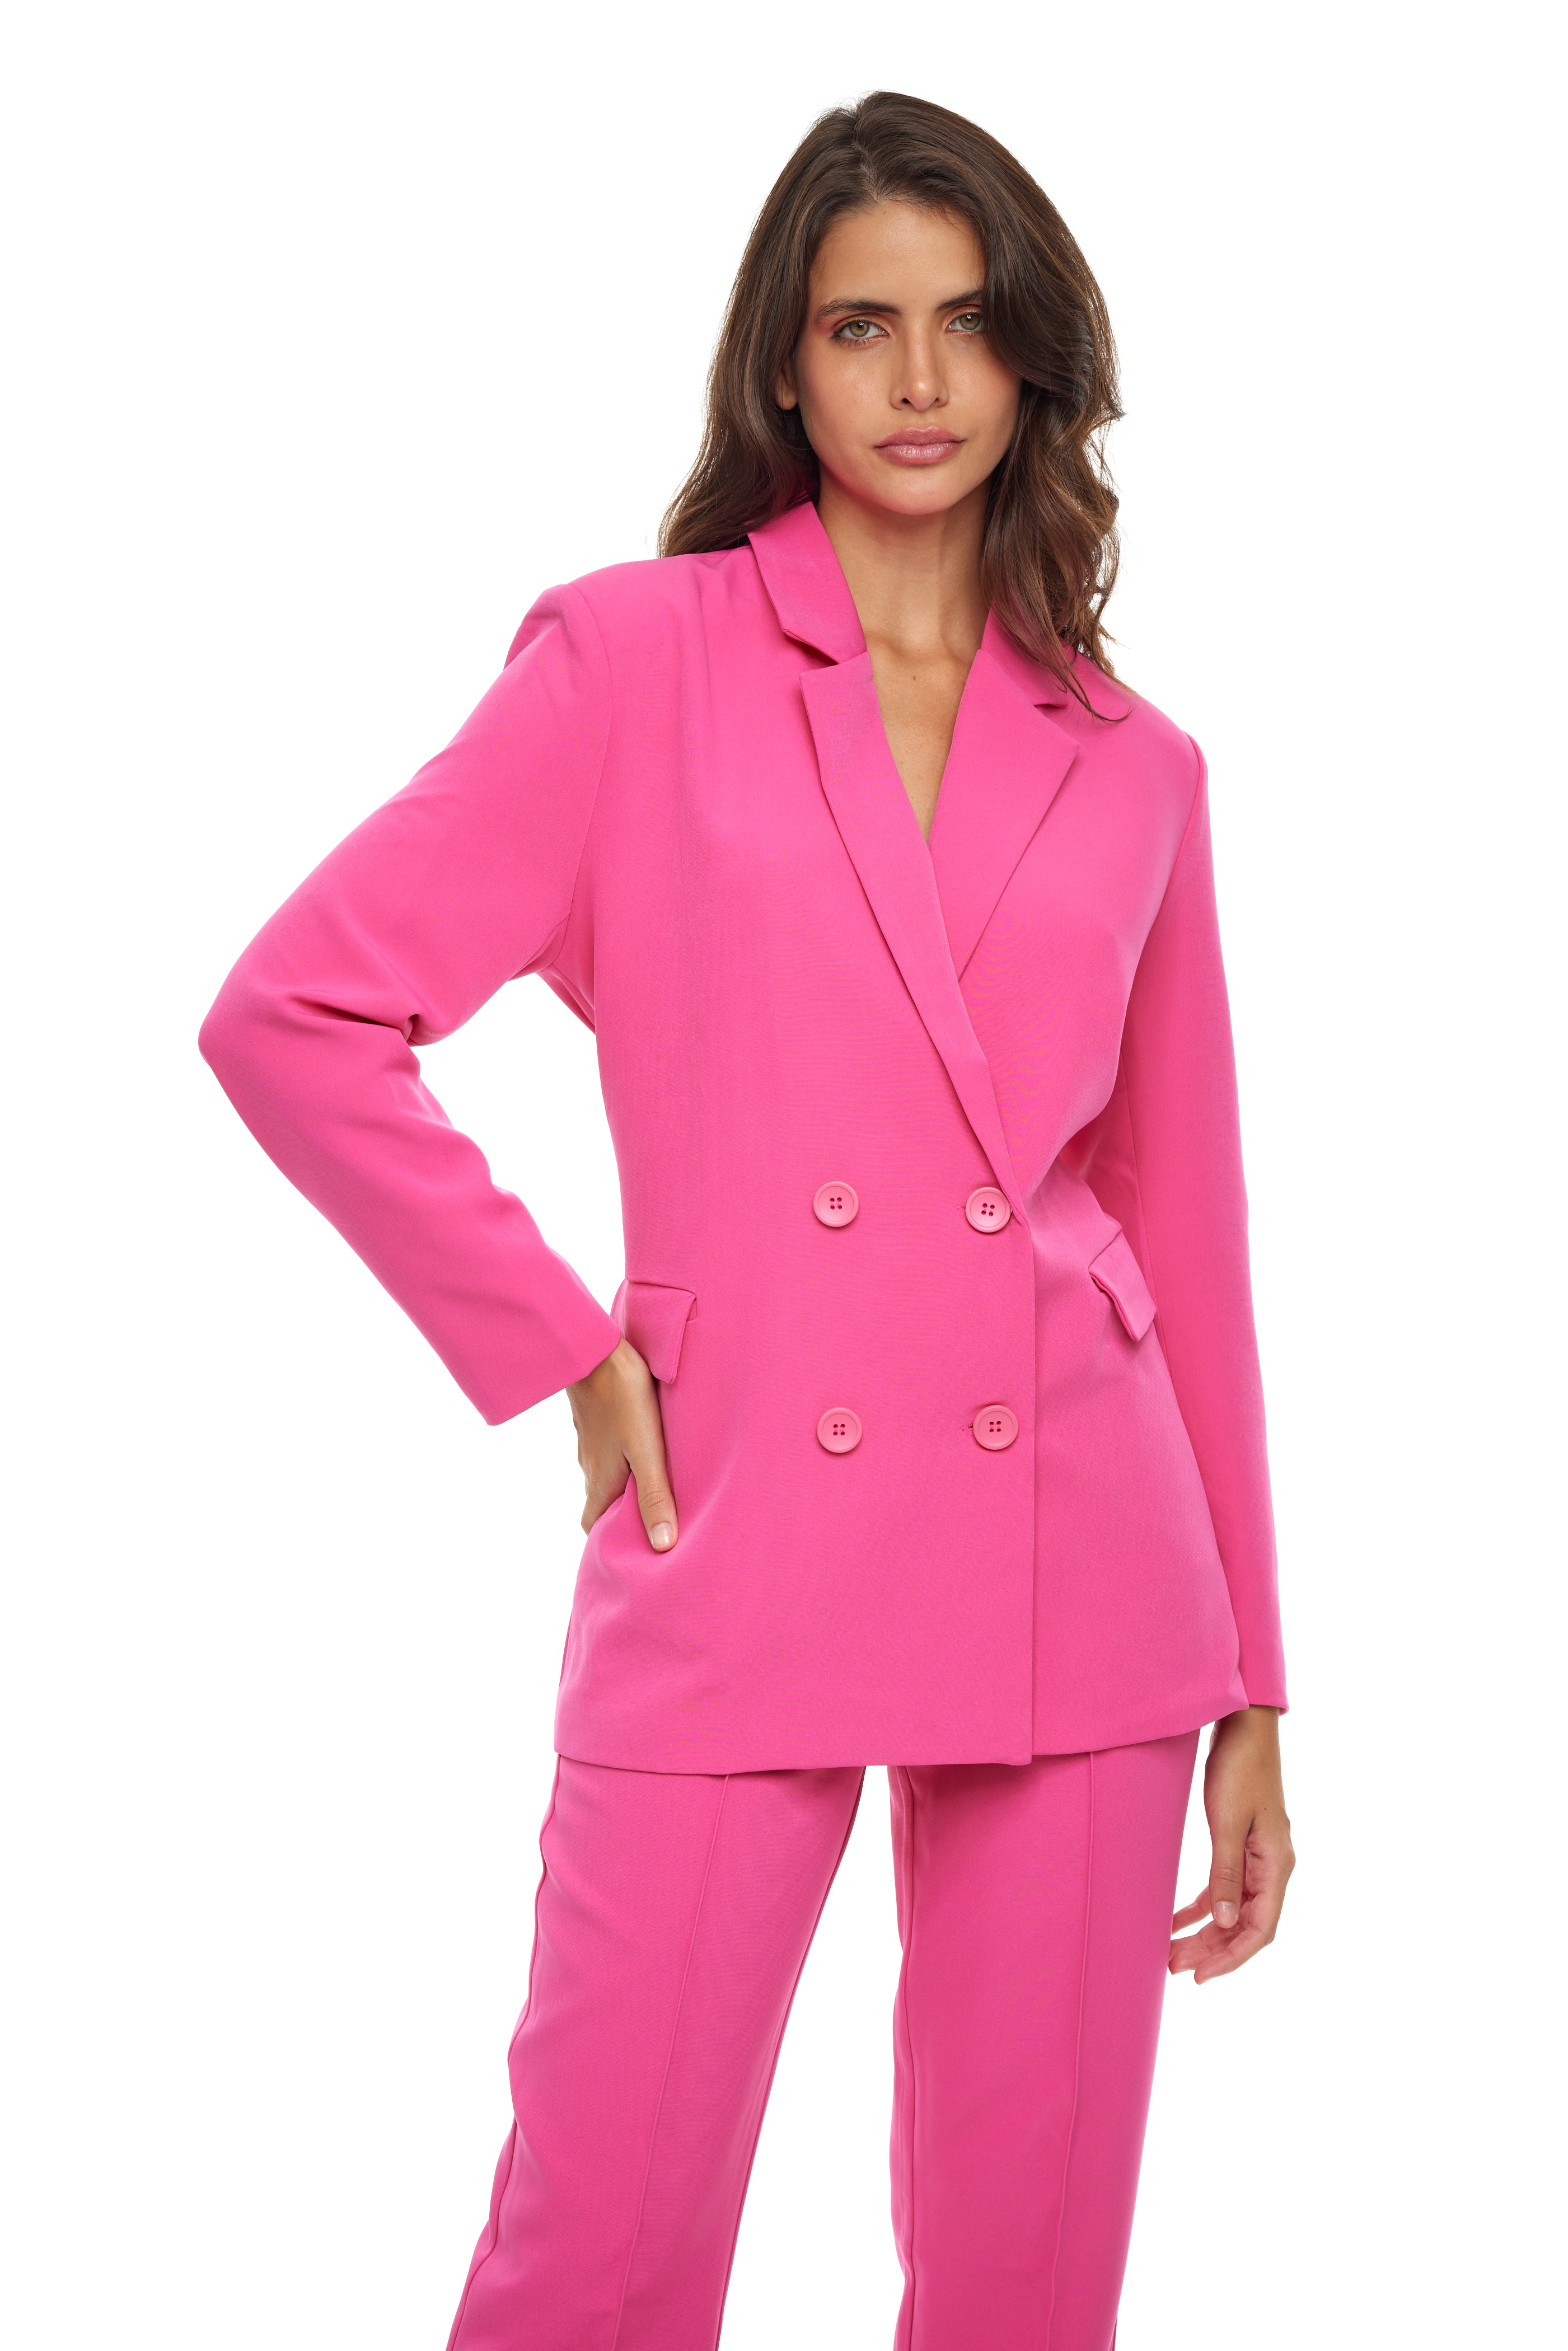 Pieces oversized blazer in bright pink